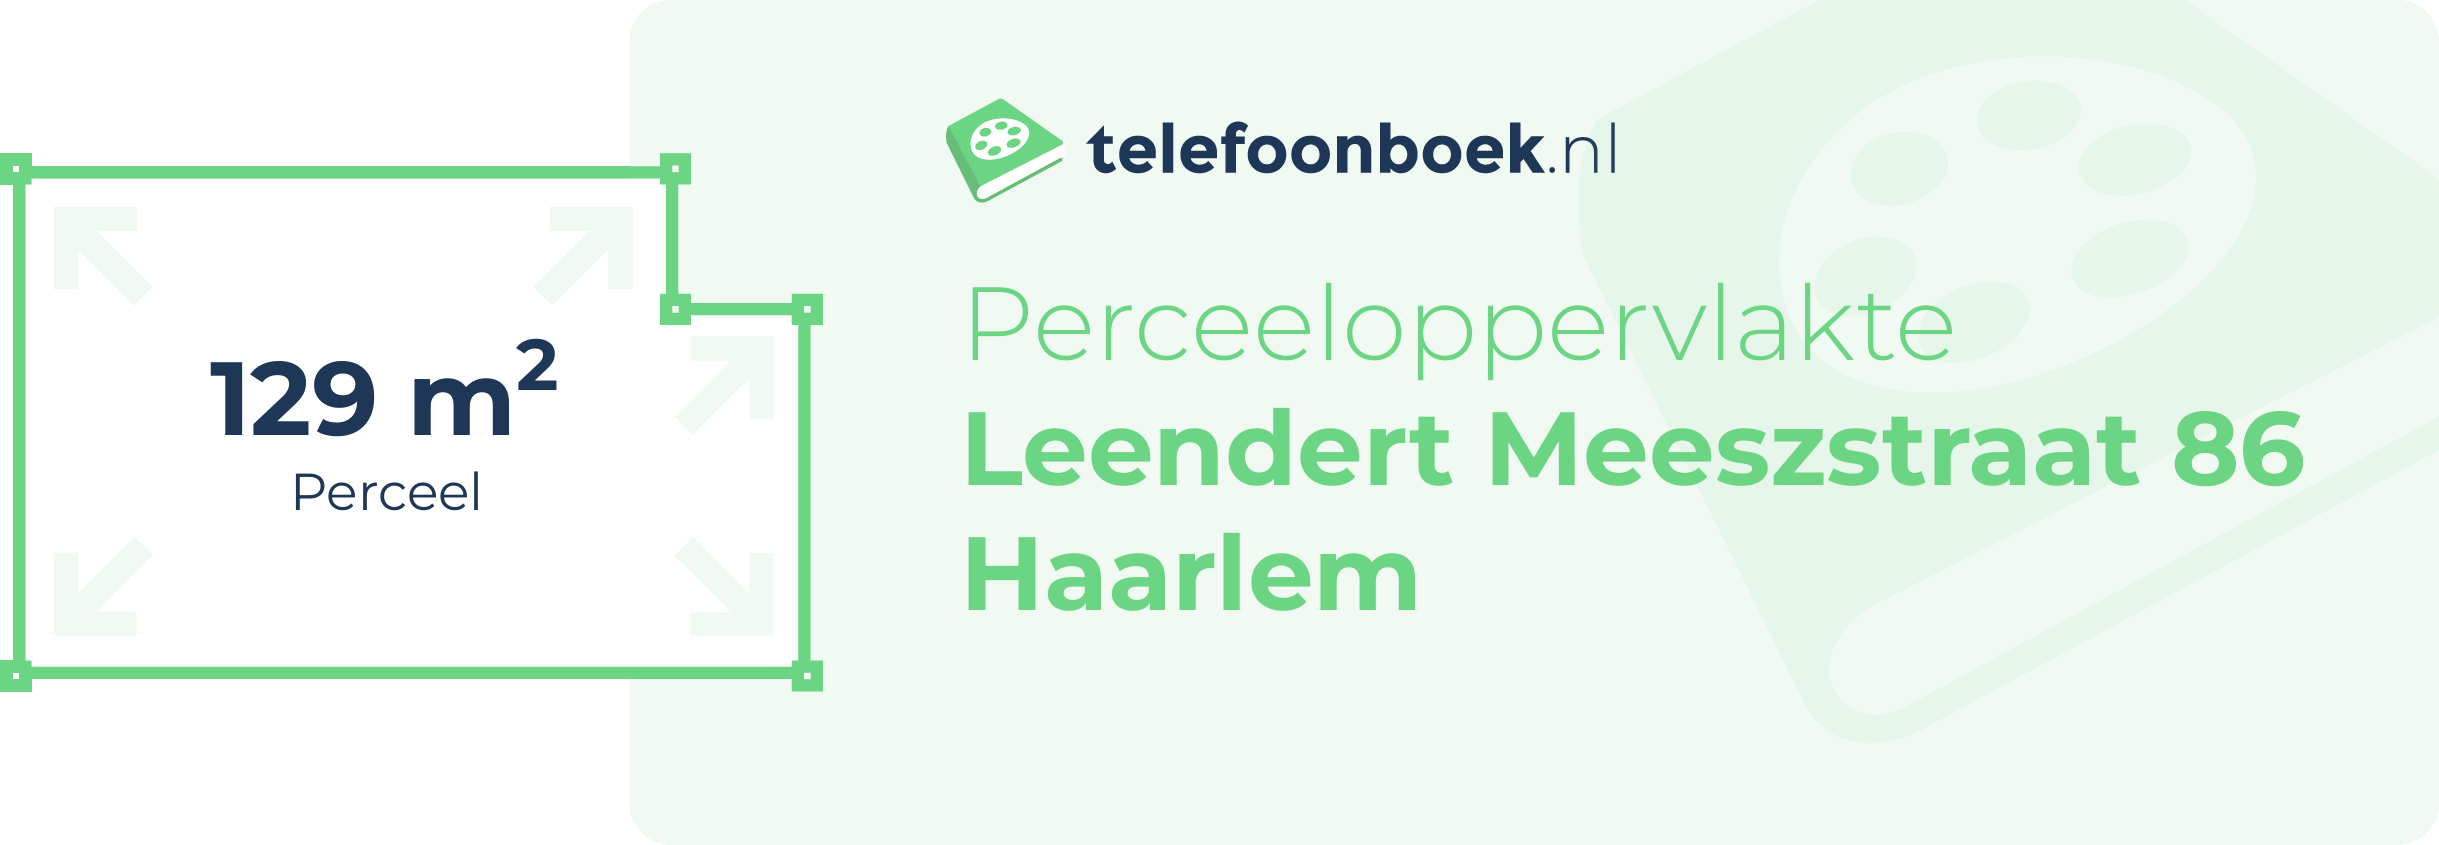 Perceeloppervlakte Leendert Meeszstraat 86 Haarlem